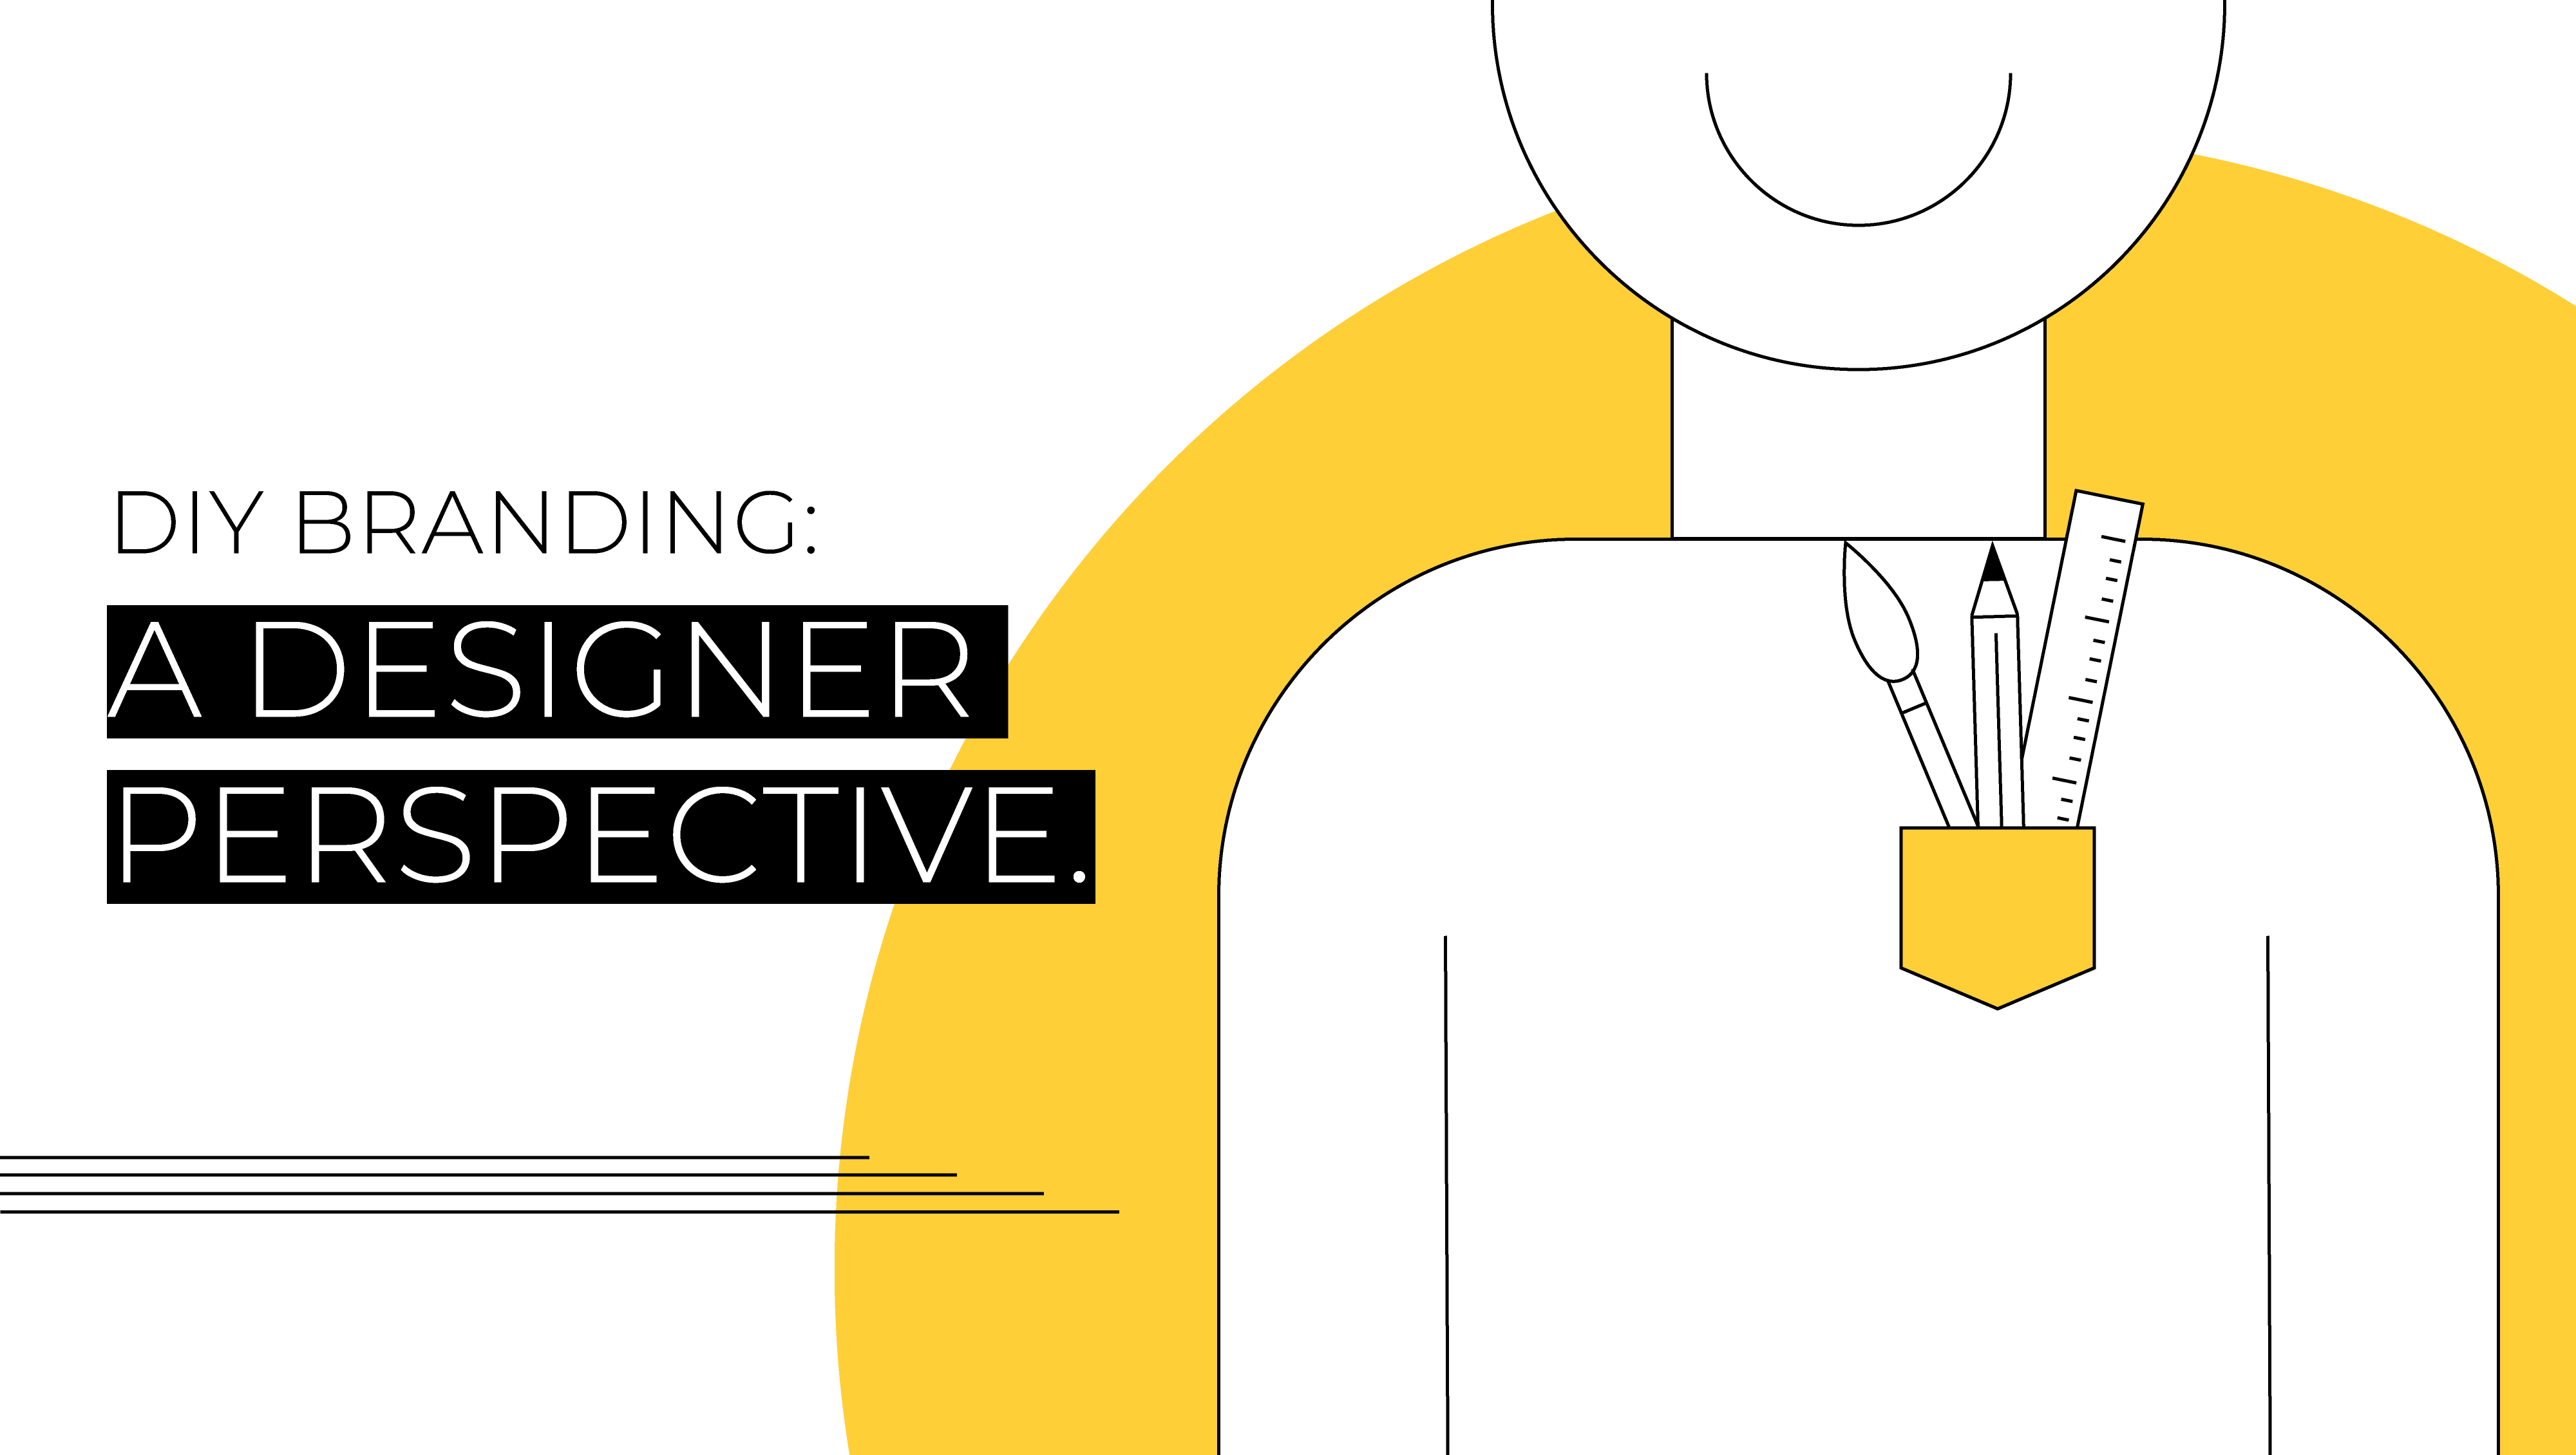 DIY Branding and Design: A Designer Perspective